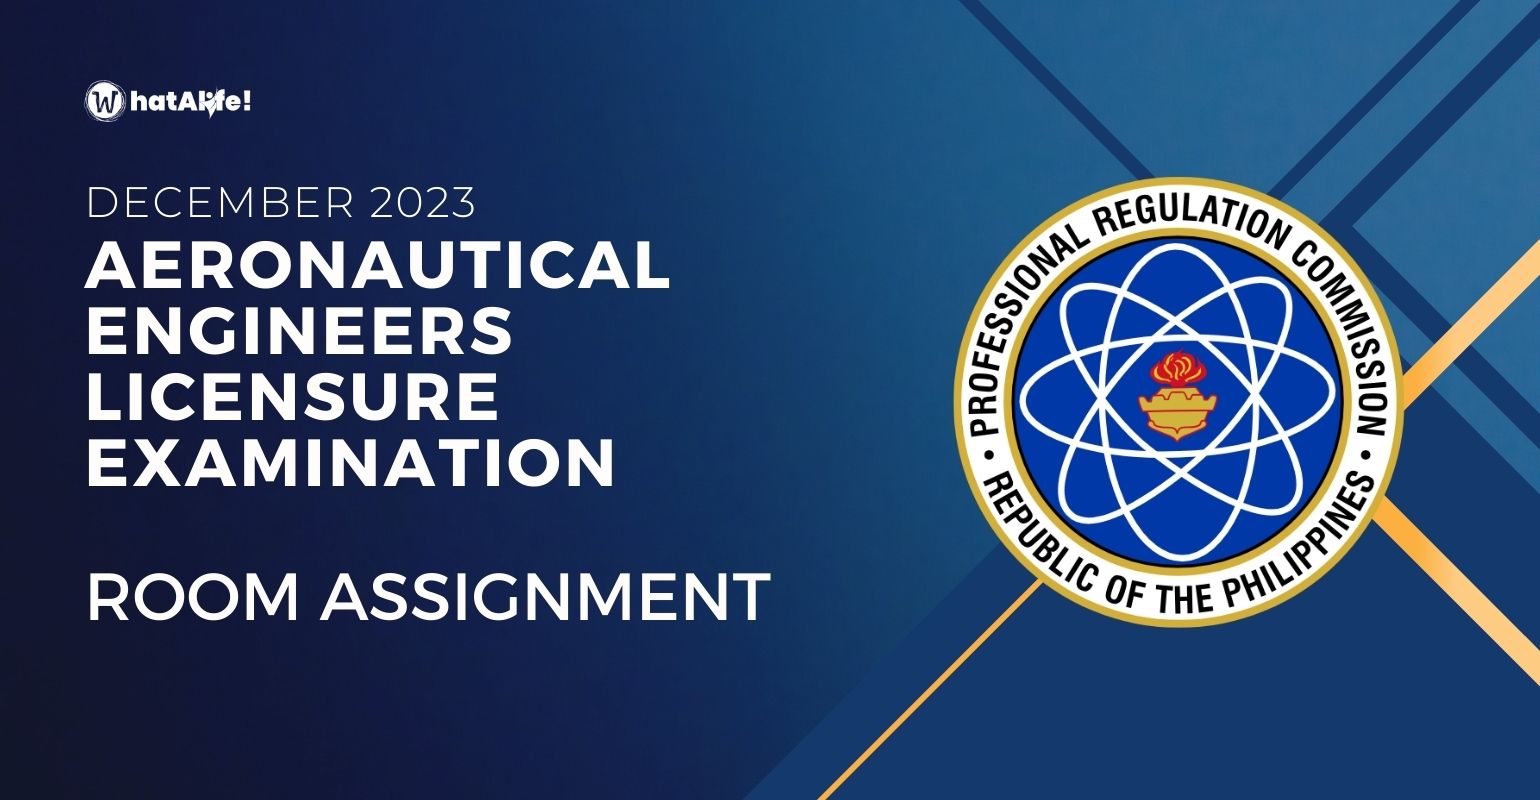 Room Assignment — December 2023 Aeronautical Engineers Licensure Exam